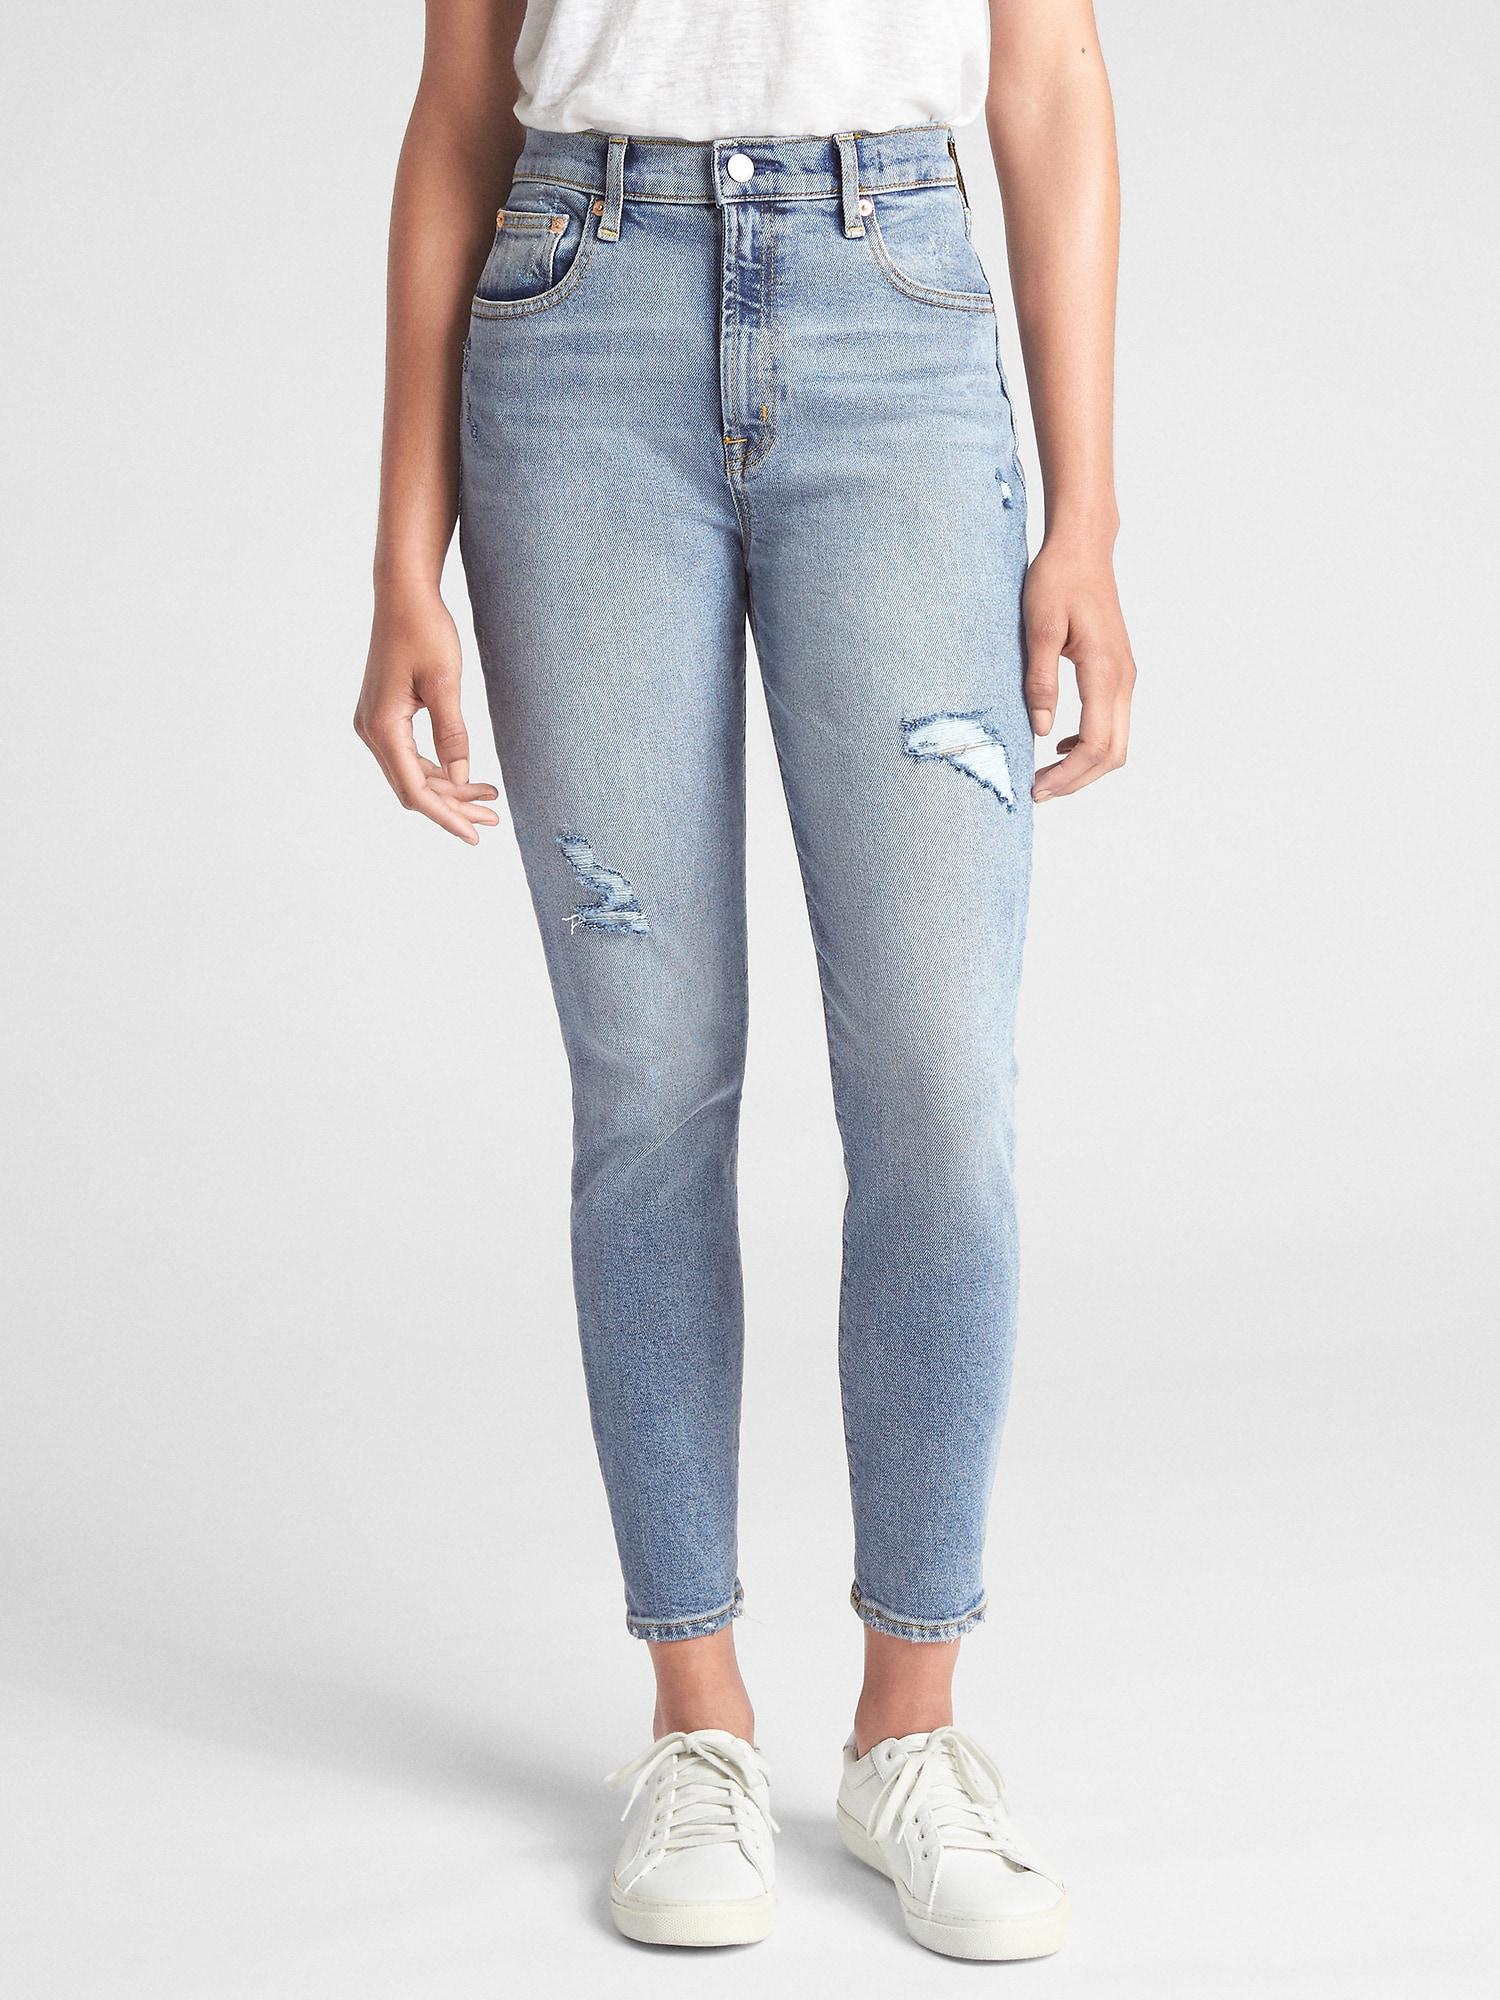 gap high waisted skinny jeans